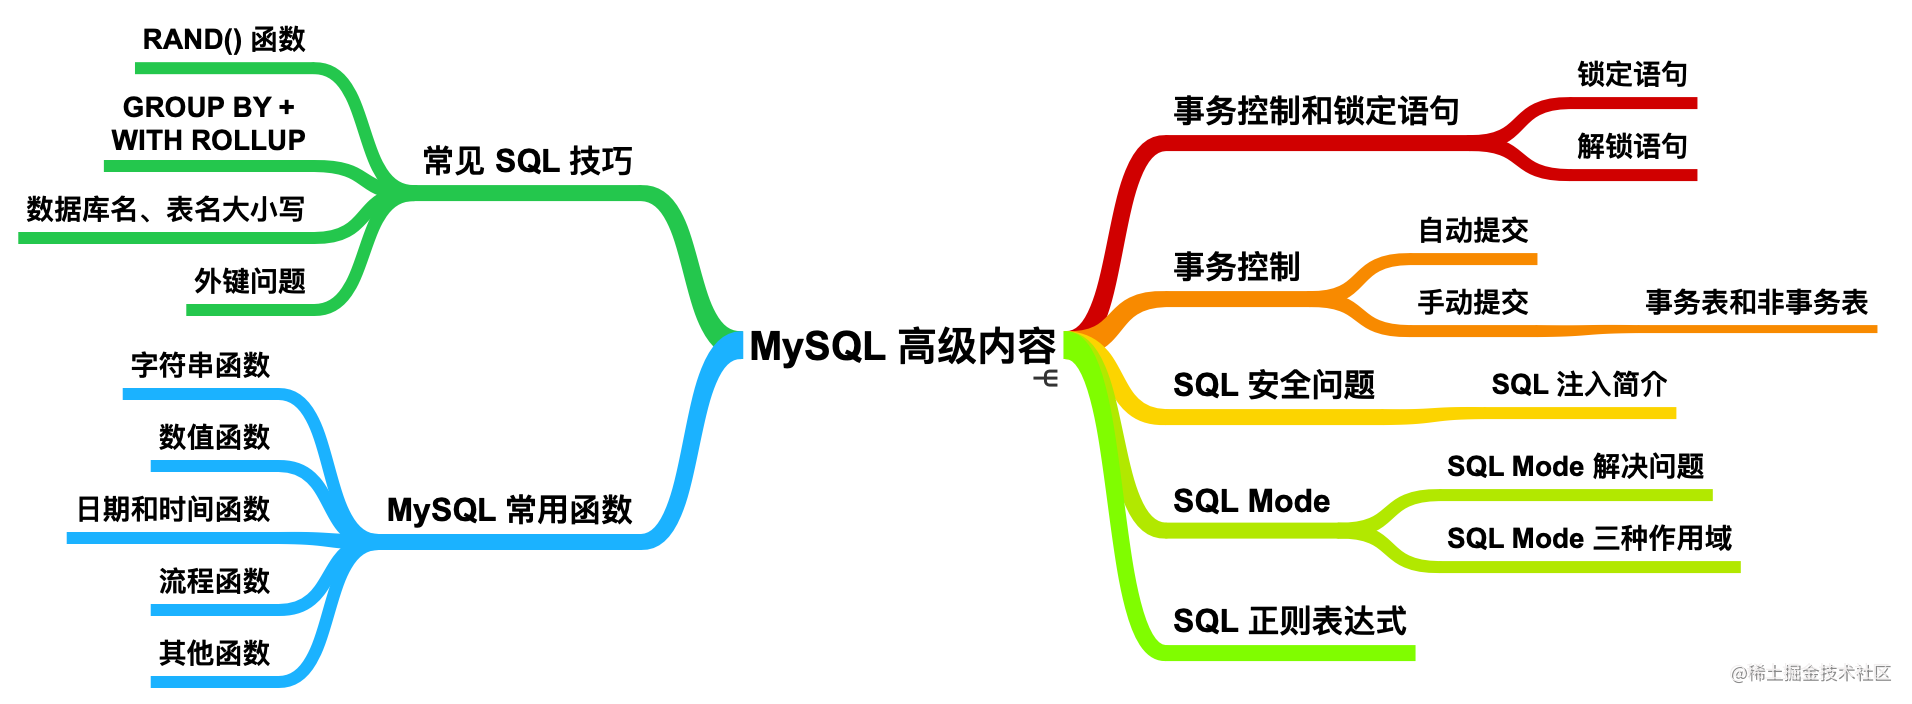 mysql 图片_MySQL 2003